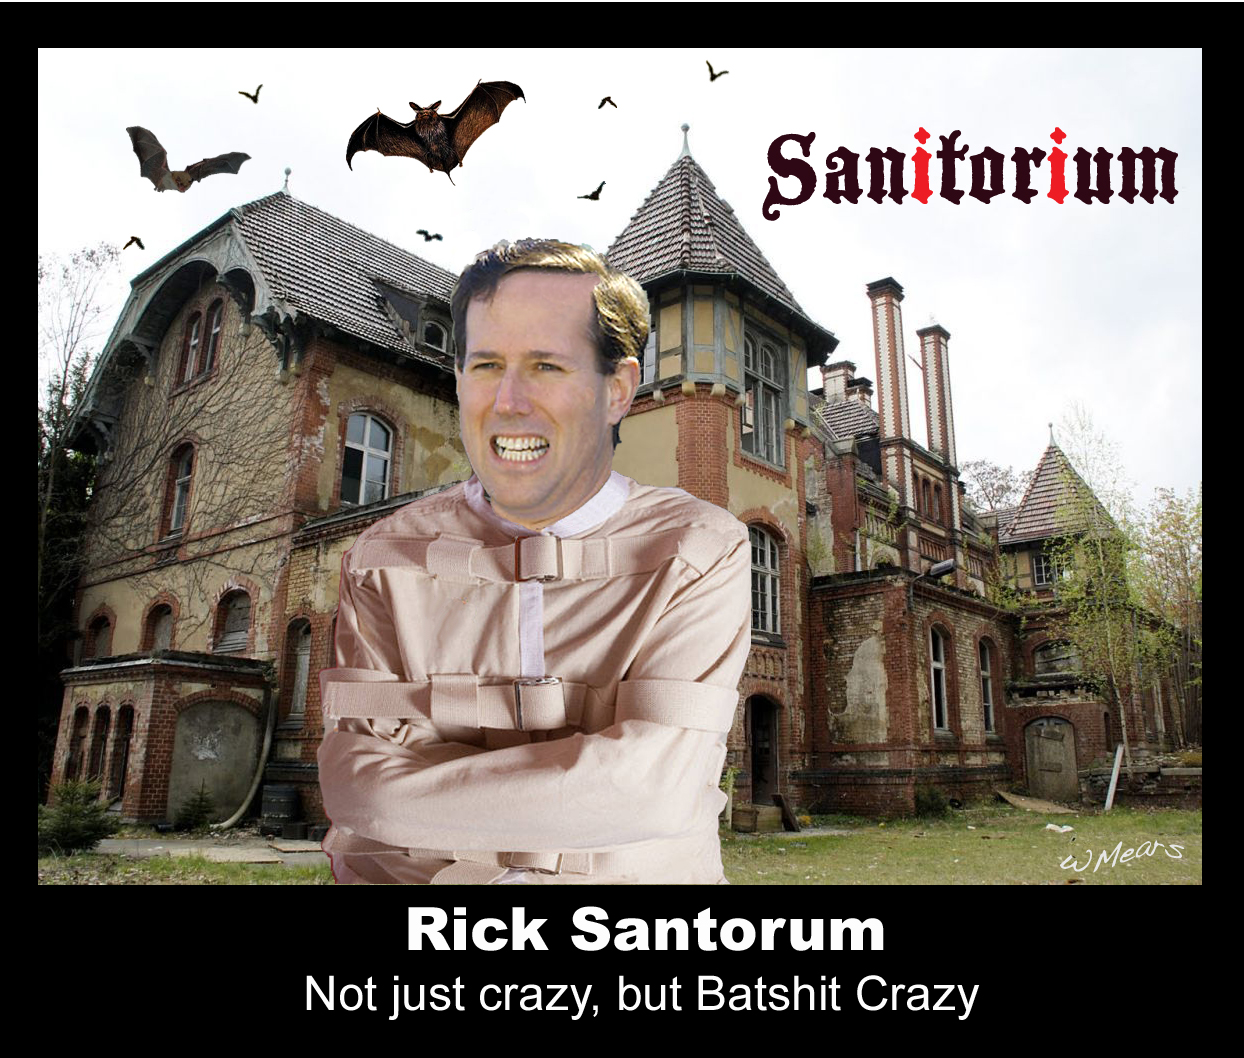 Eyes on Santorum - Not just crazy, but batshit crazy.